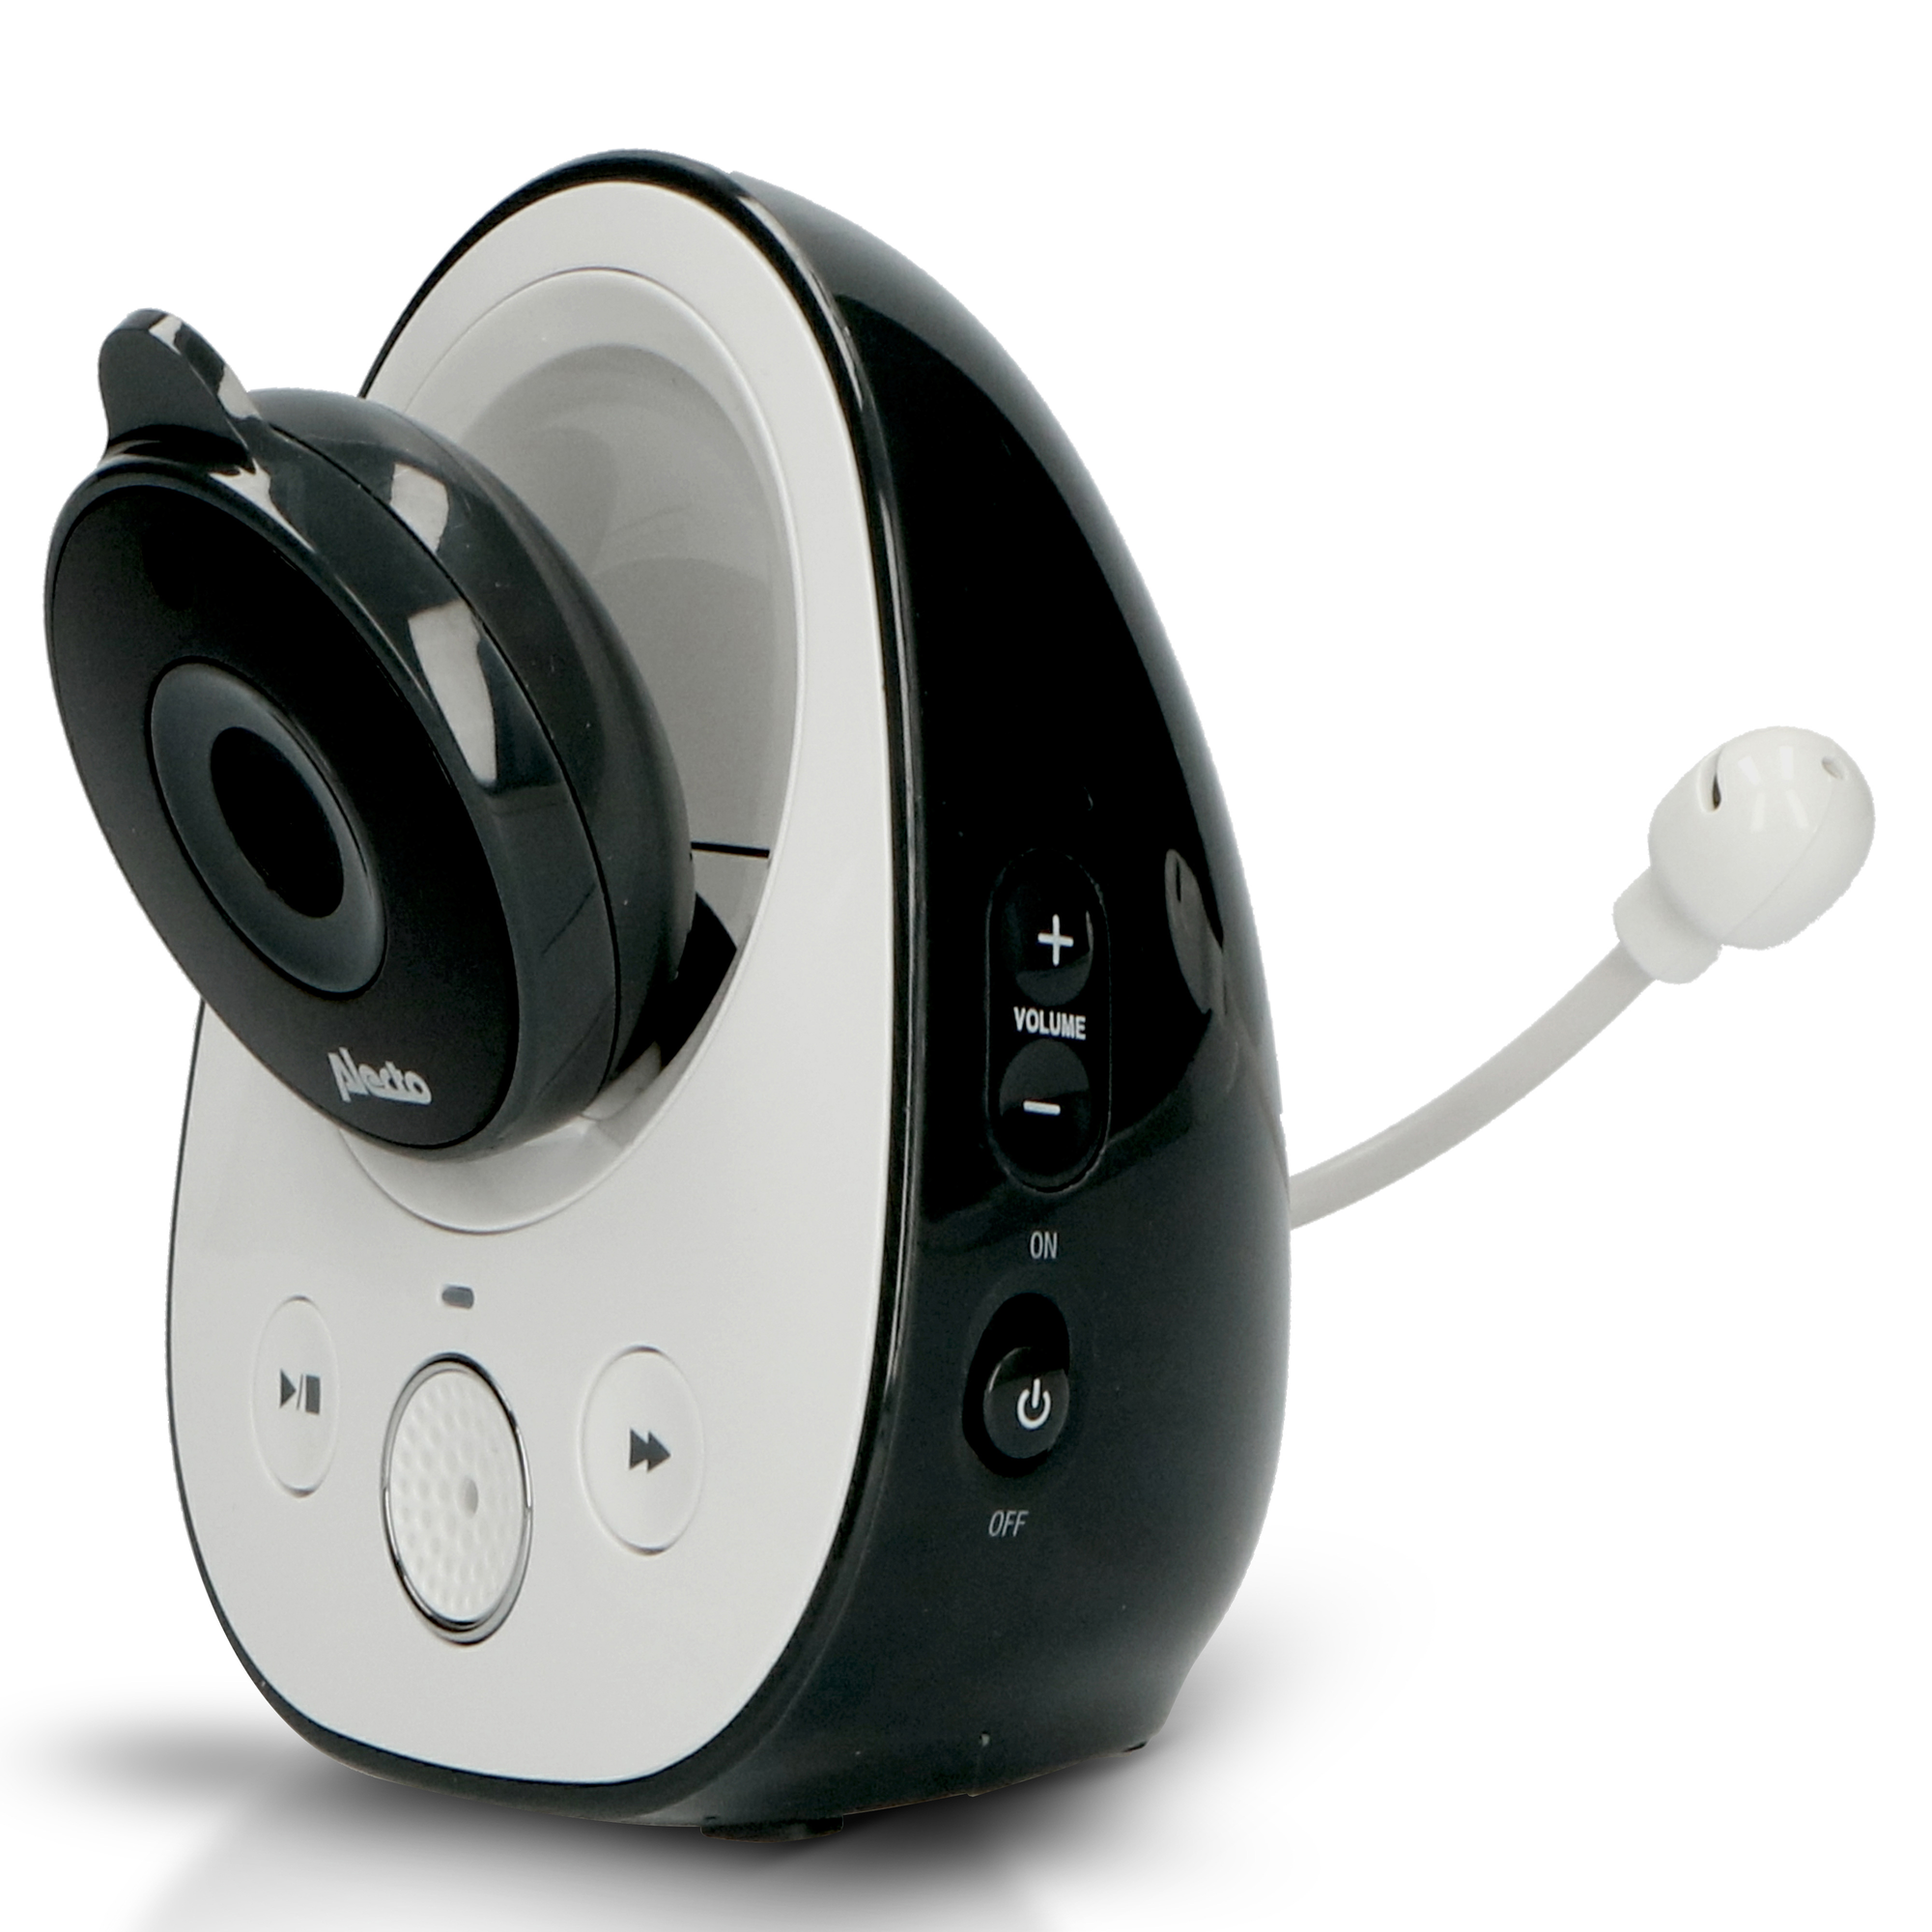 ALECTO DVM-150 Video-Babyphone 5 Zoll Farbdisplay - 